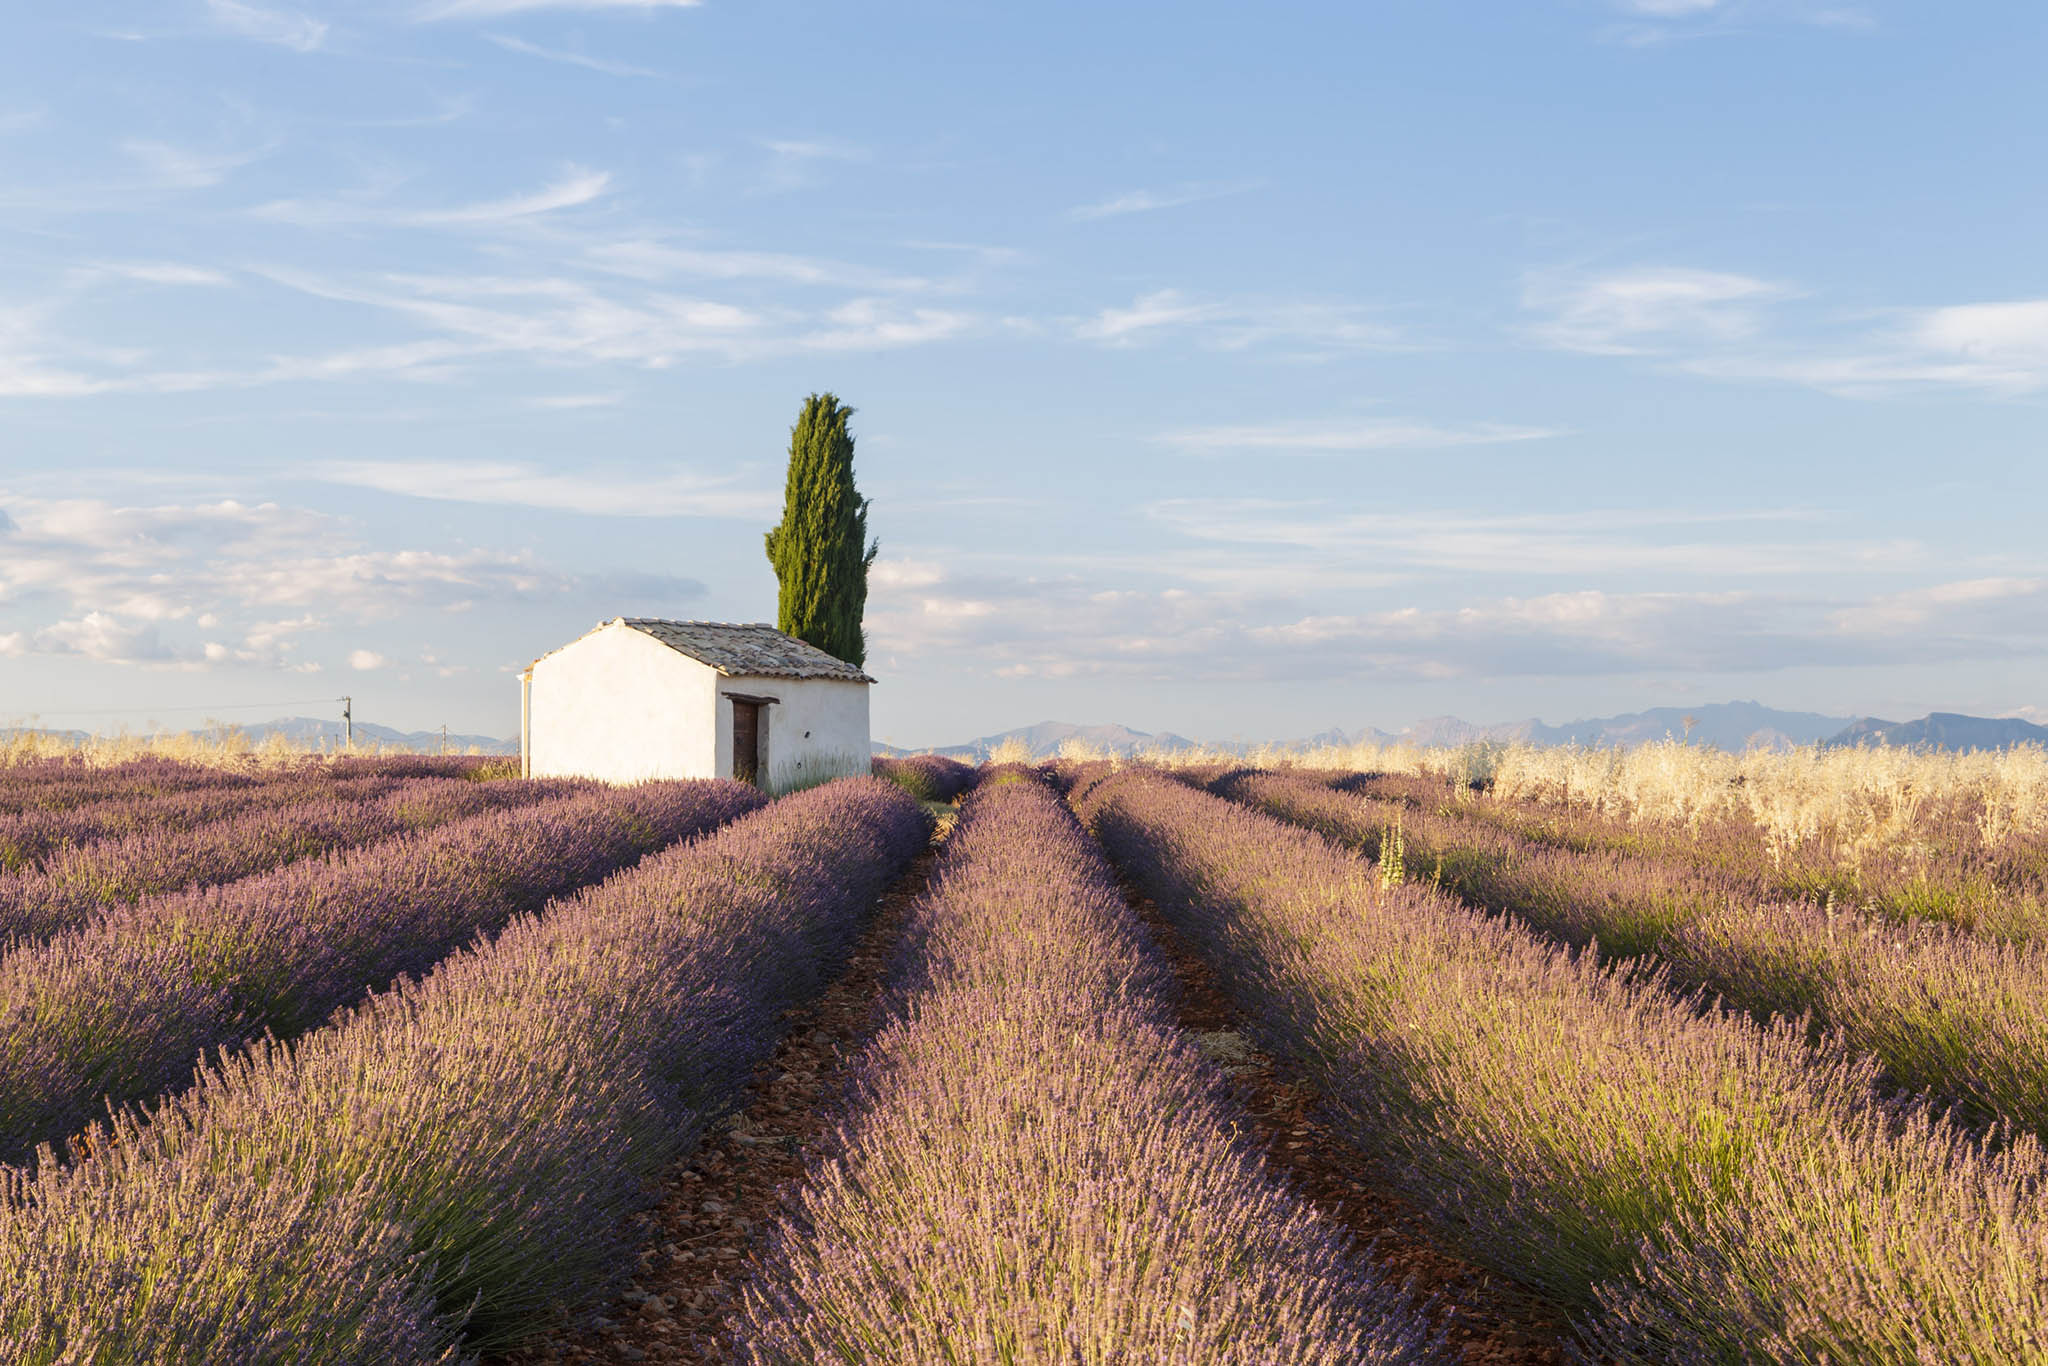 Lavender fields on the Plateau de Valensole, Provence.